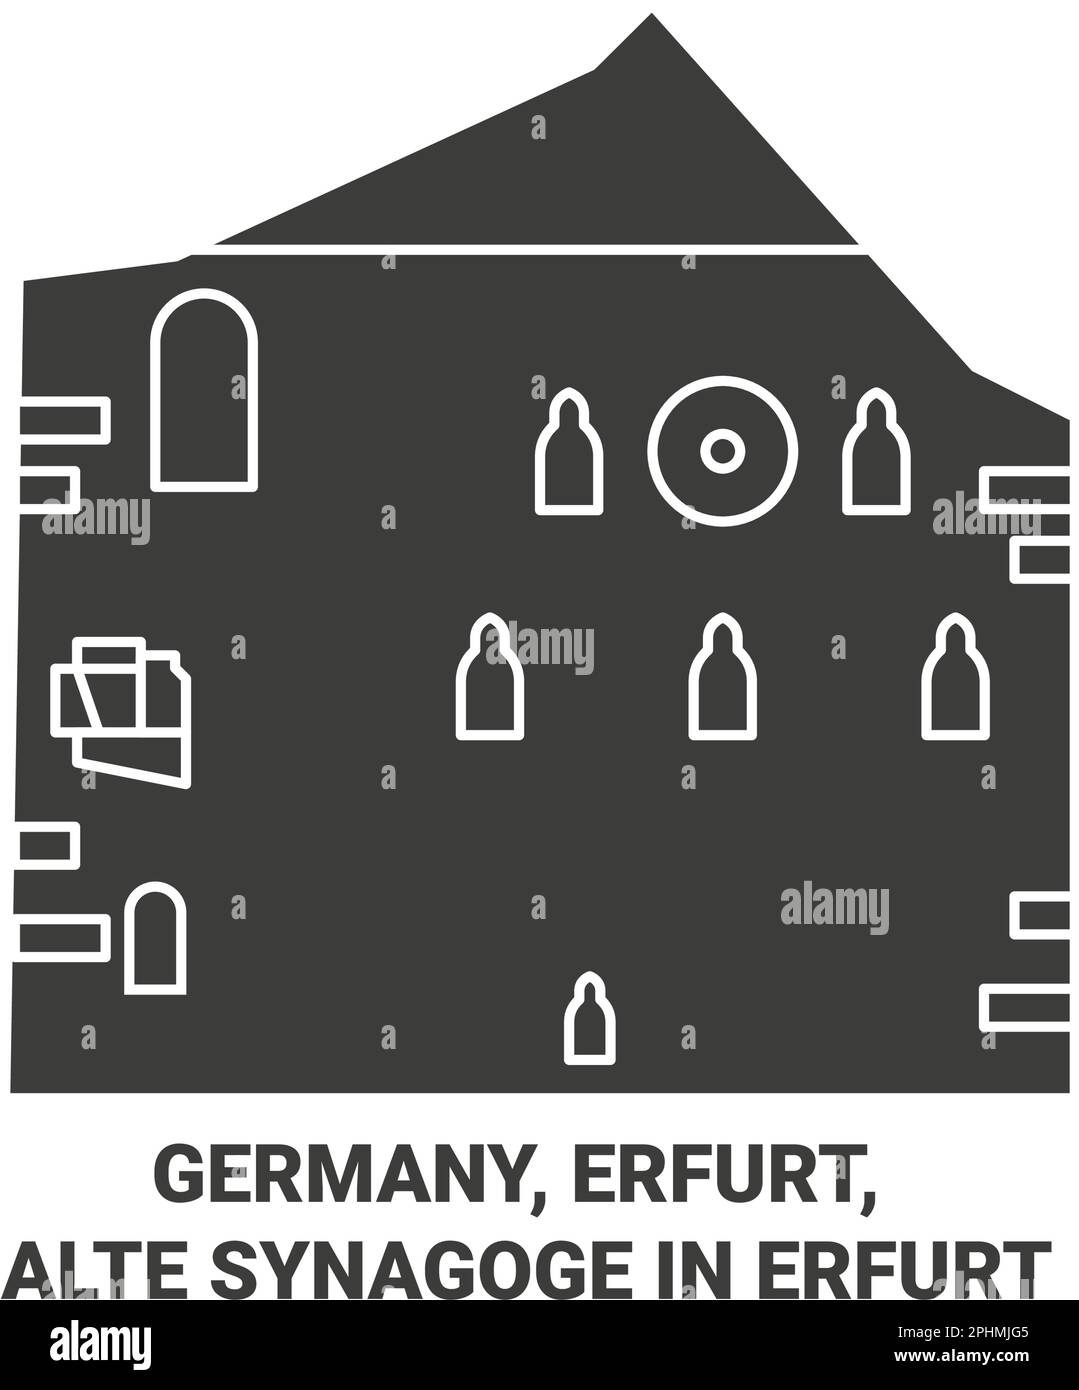 Germany, Erfurt, Alte Synagoge In Erfurt travel landmark vector illustration Stock Vector